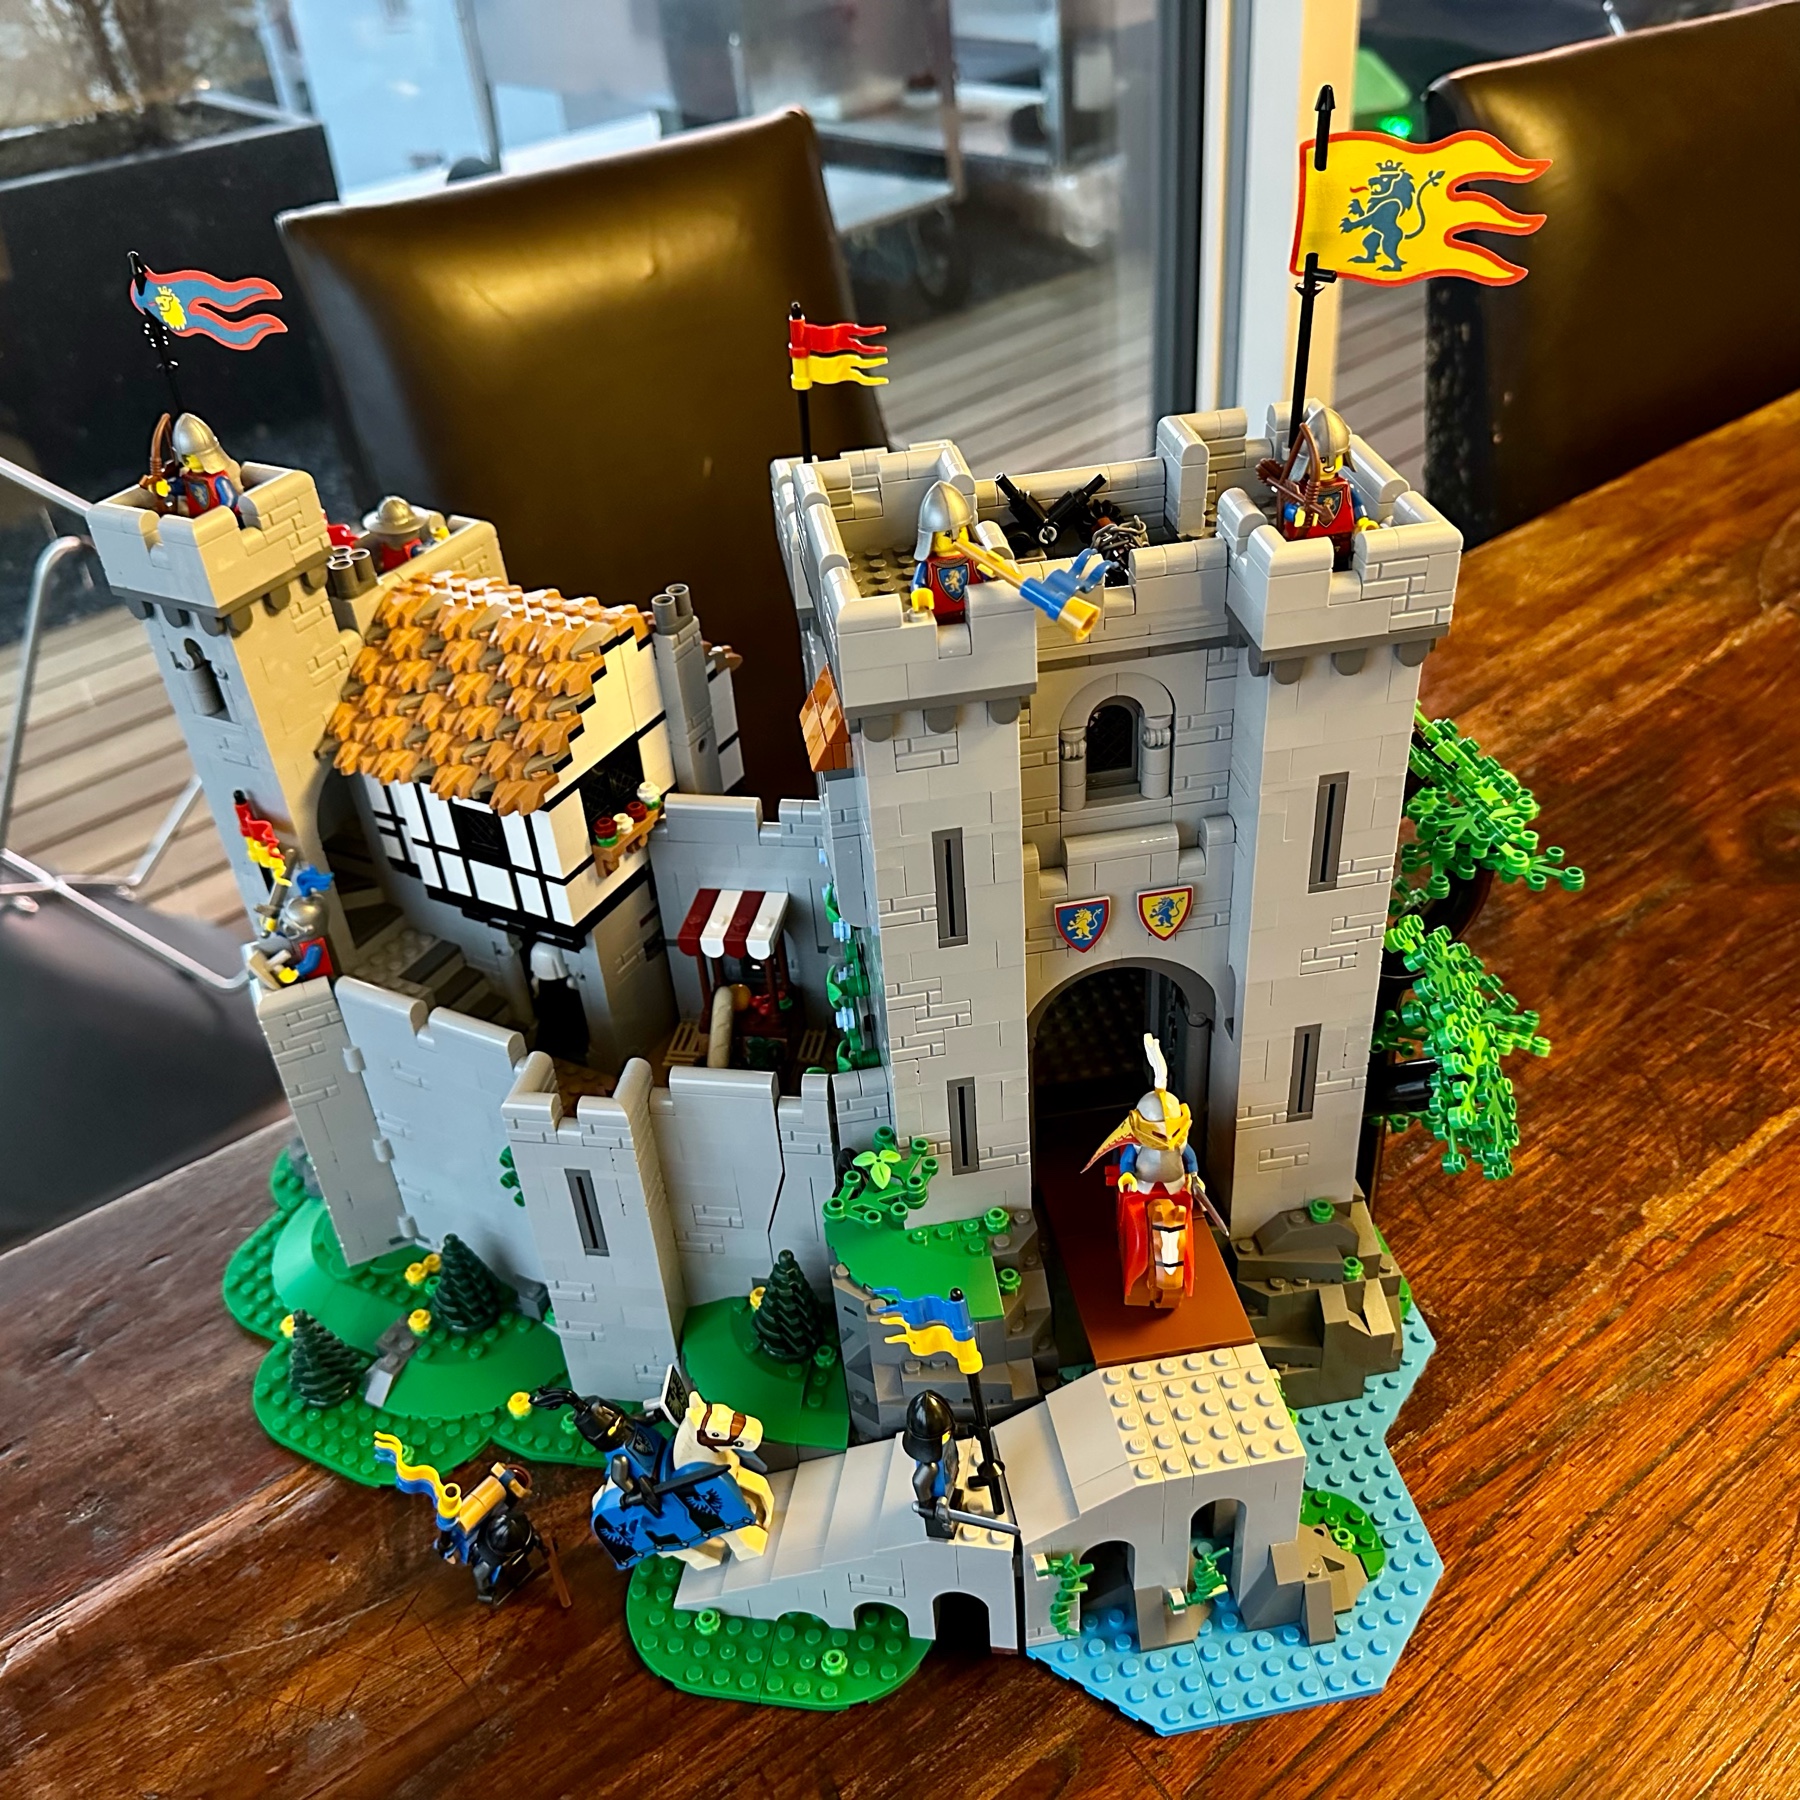 LEGO castle dollhouse closed up.